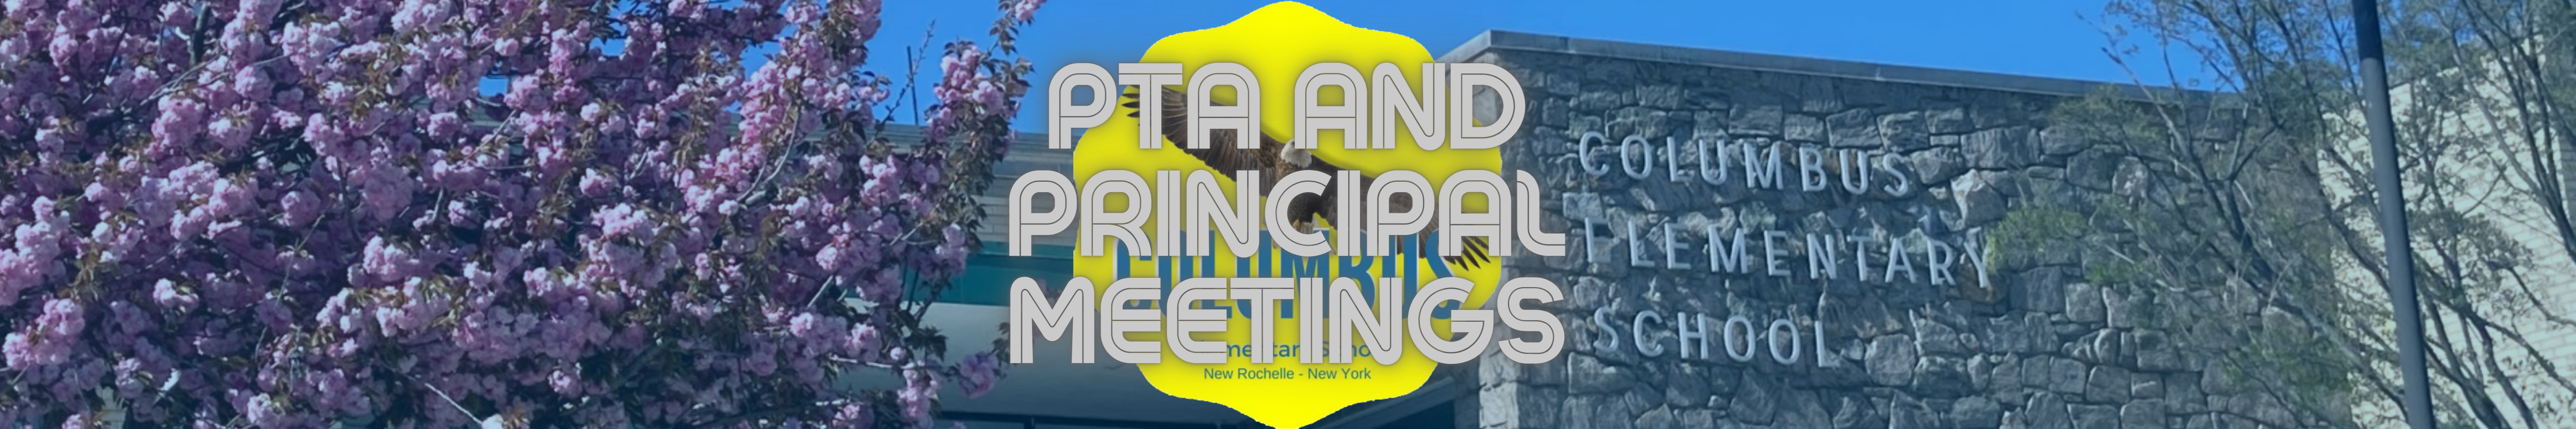 PTA and Principal Meetings banners